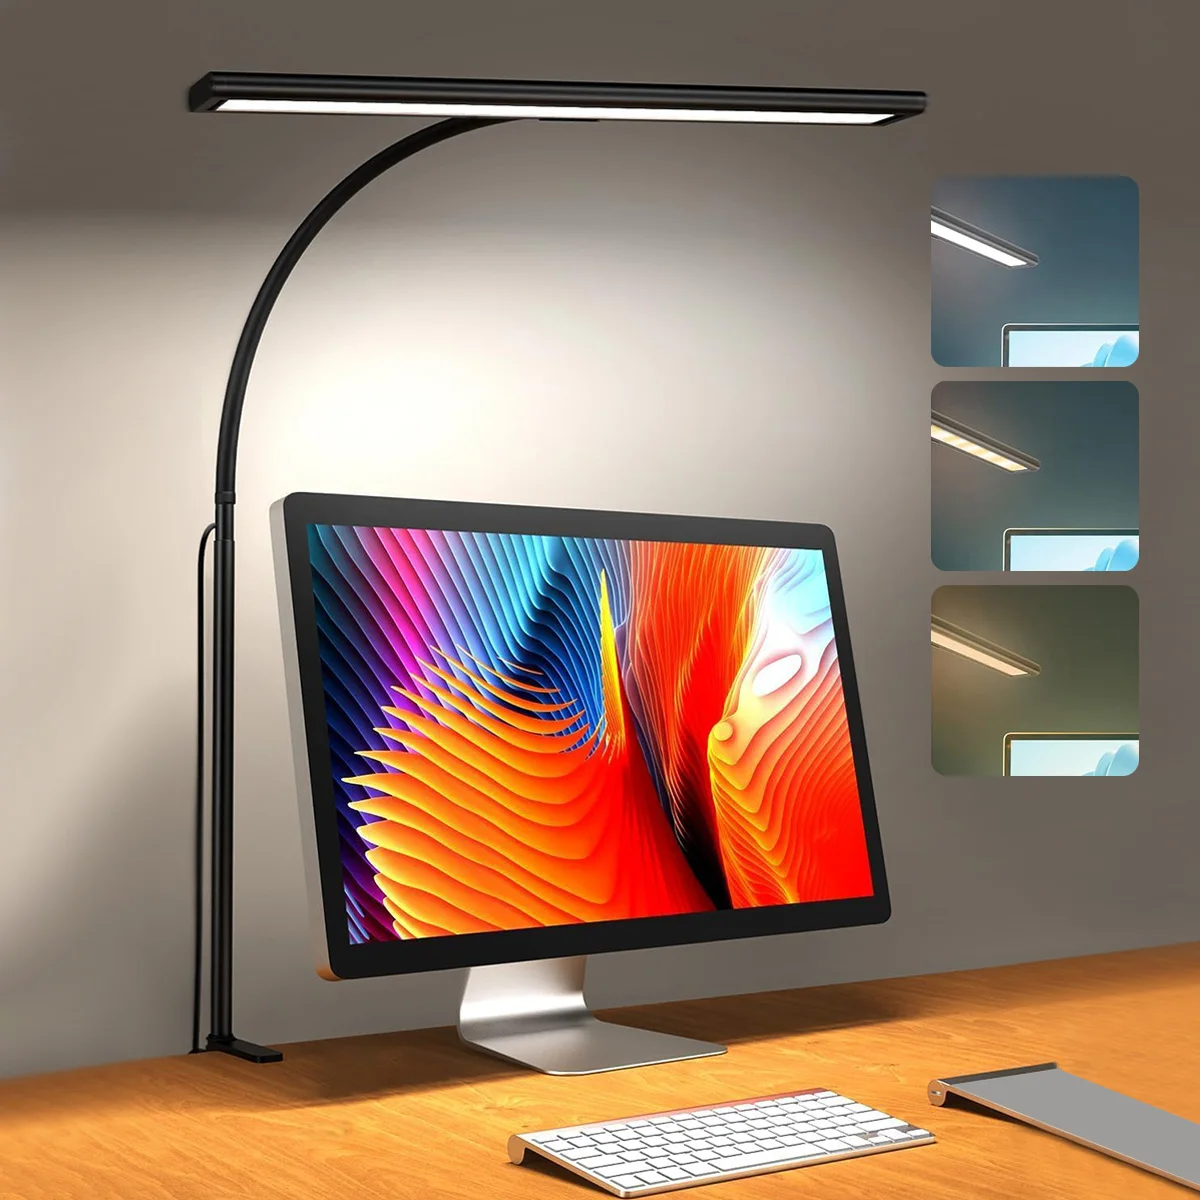 LED Desk Lamp with Clamp Remote Control Computer Desk Light Bright Deskt... - $38.51